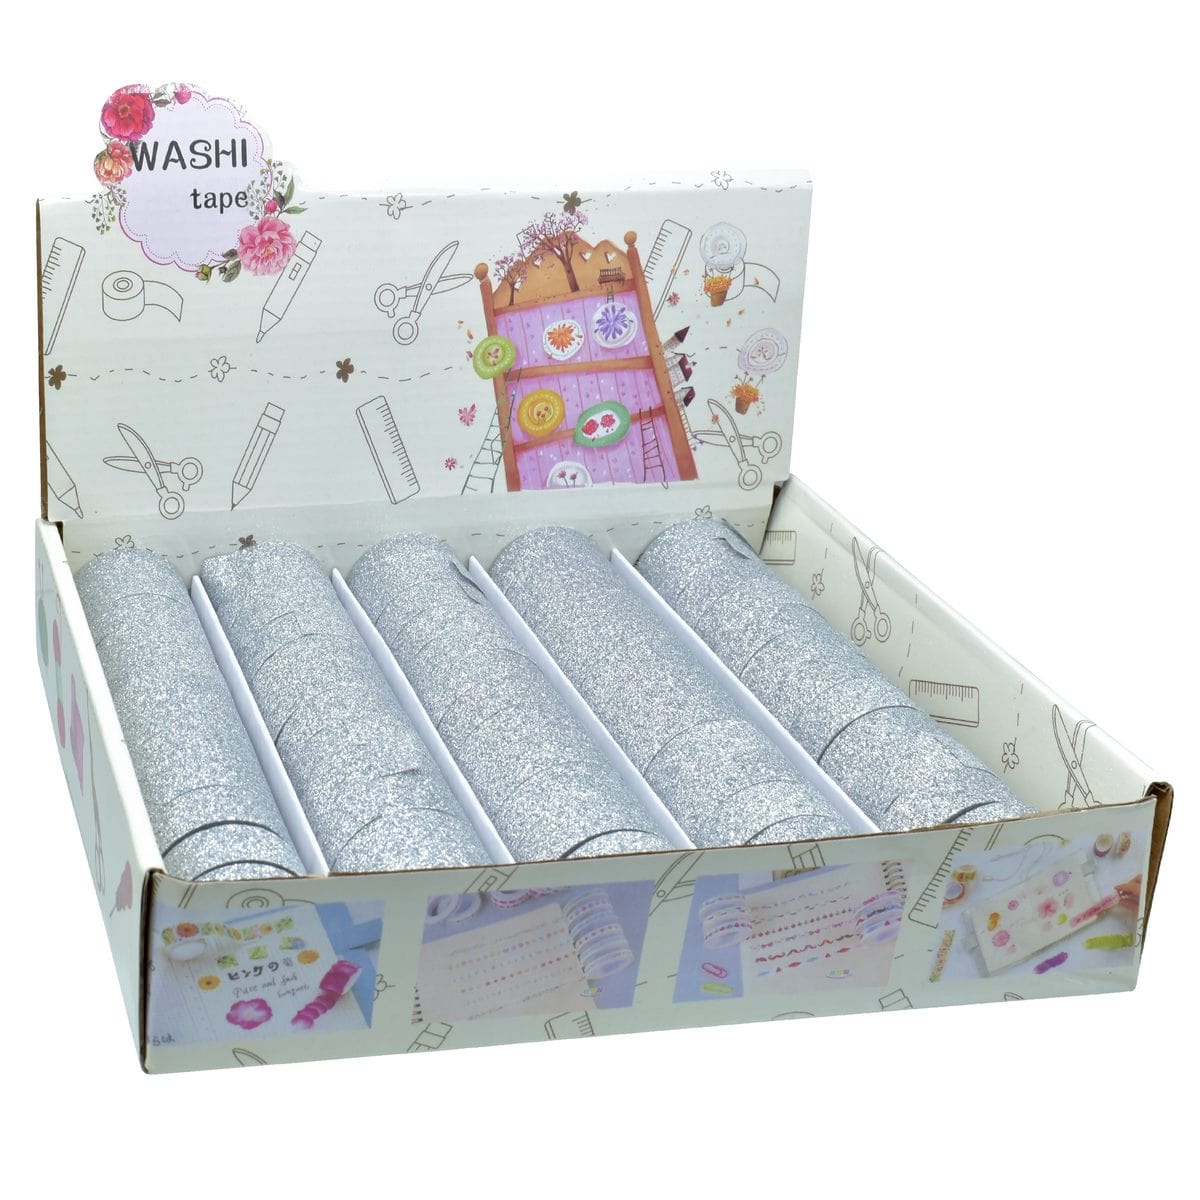 jags-mumbai Washi Tape (Pack of 60 tapes) Craft Tape Washi 1pcs Glitter Silver Color